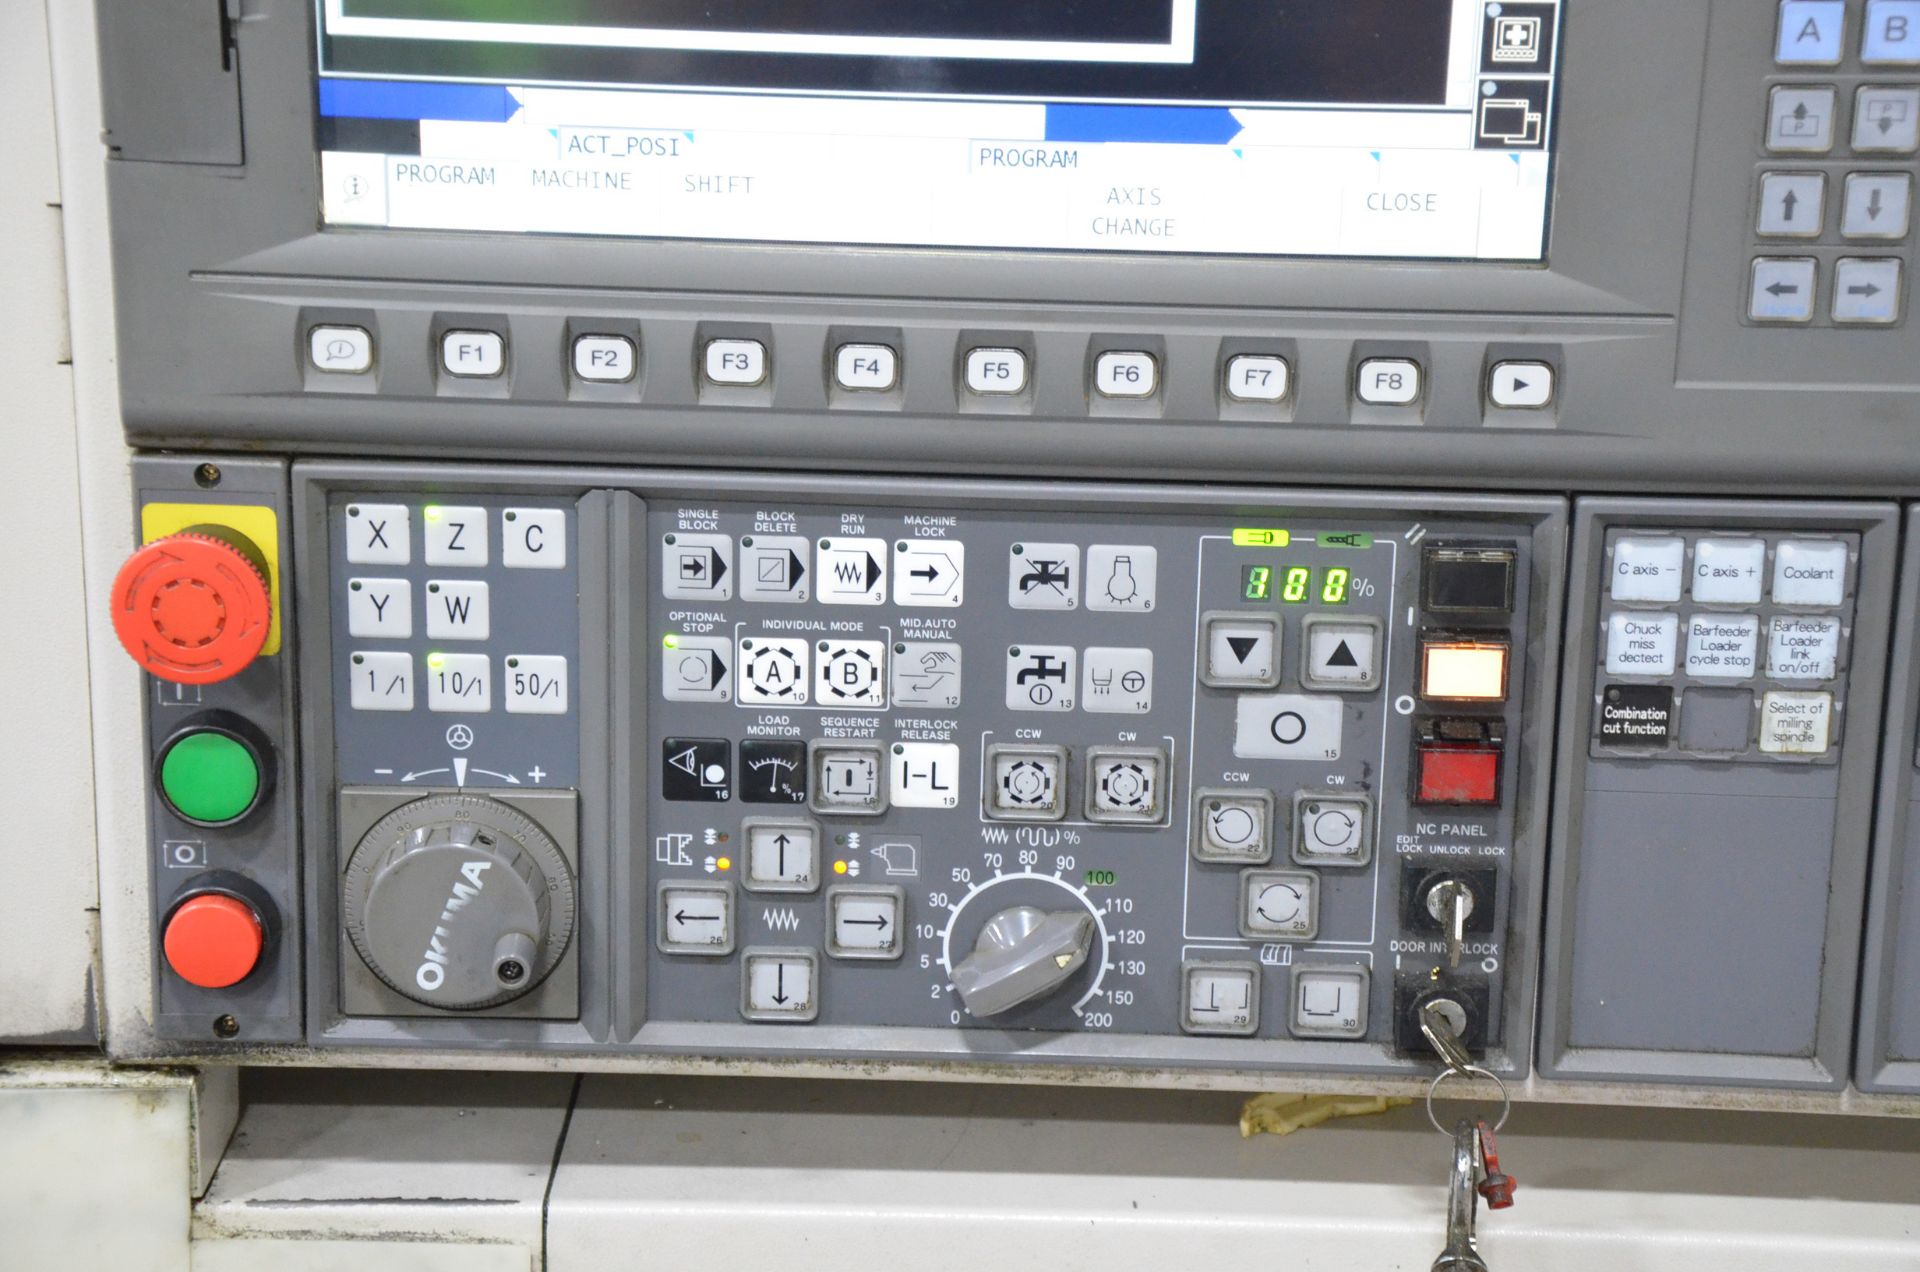 OKUMA (2008) ES-L8II-M CNC TURNING AND LIVE MILLING CENTER WITH OKUMA OSP-P200L-R CNC CONTROL, 17. - Image 8 of 13